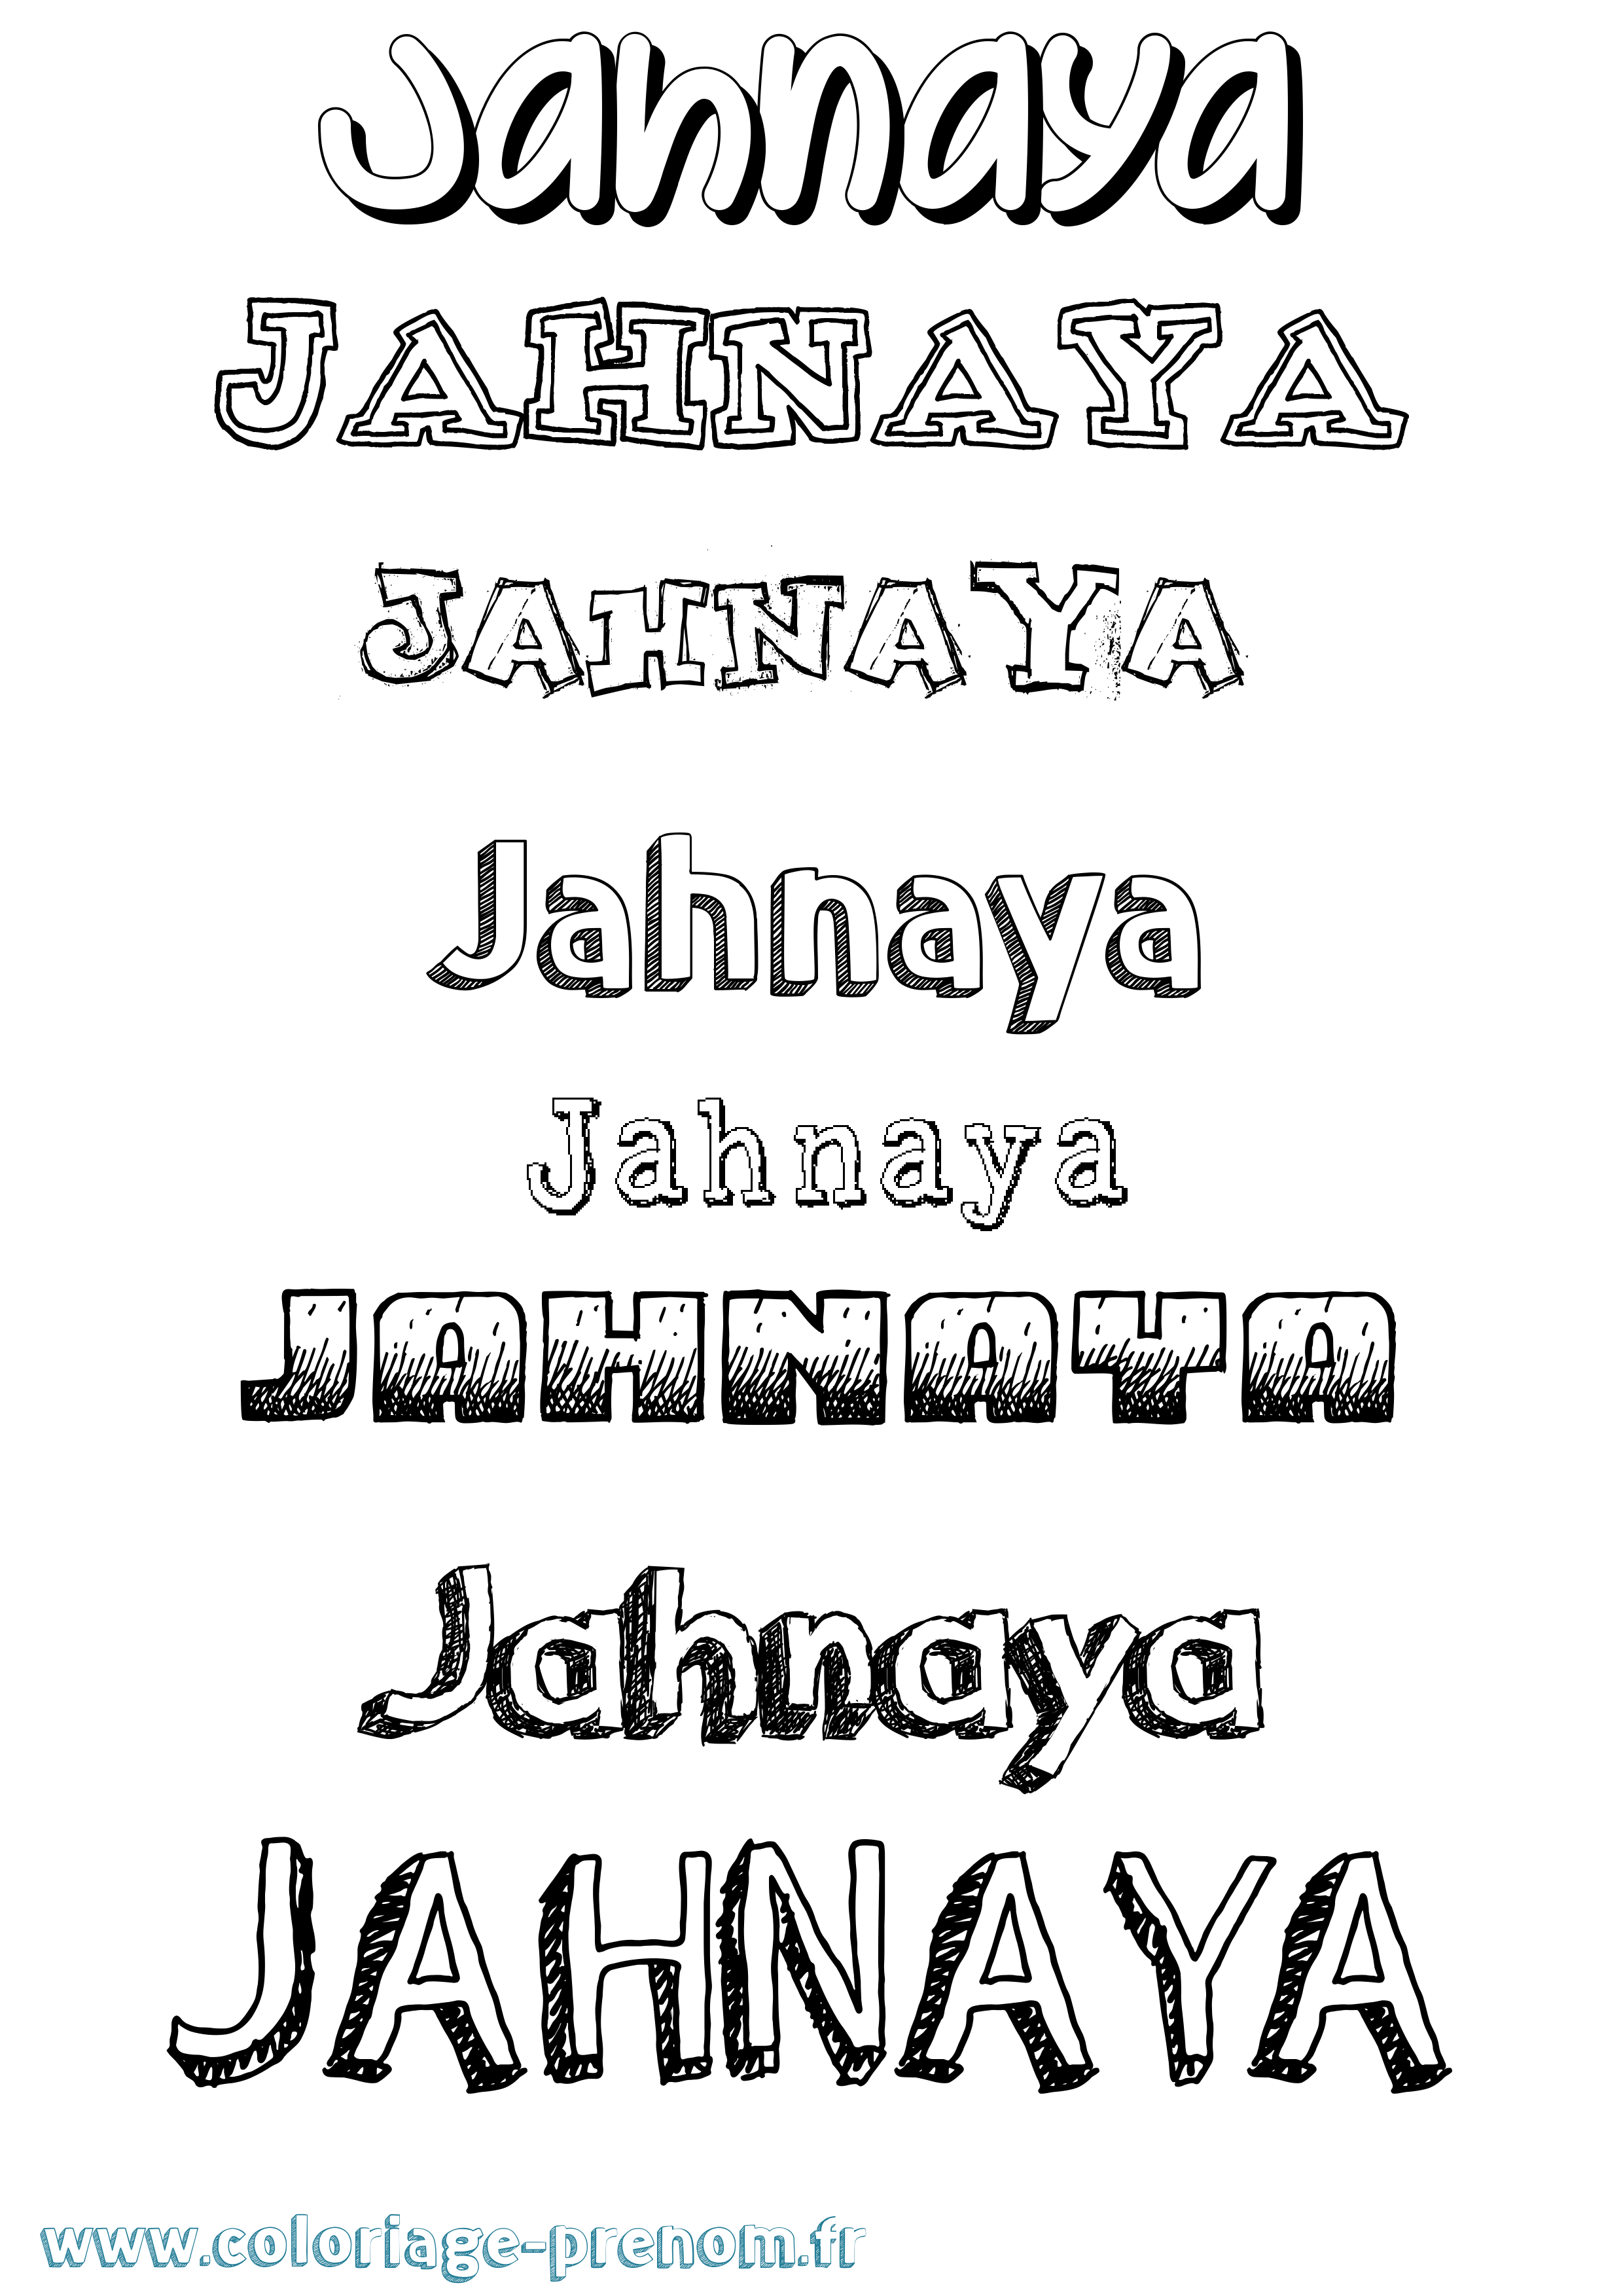 Coloriage prénom Jahnaya Dessiné